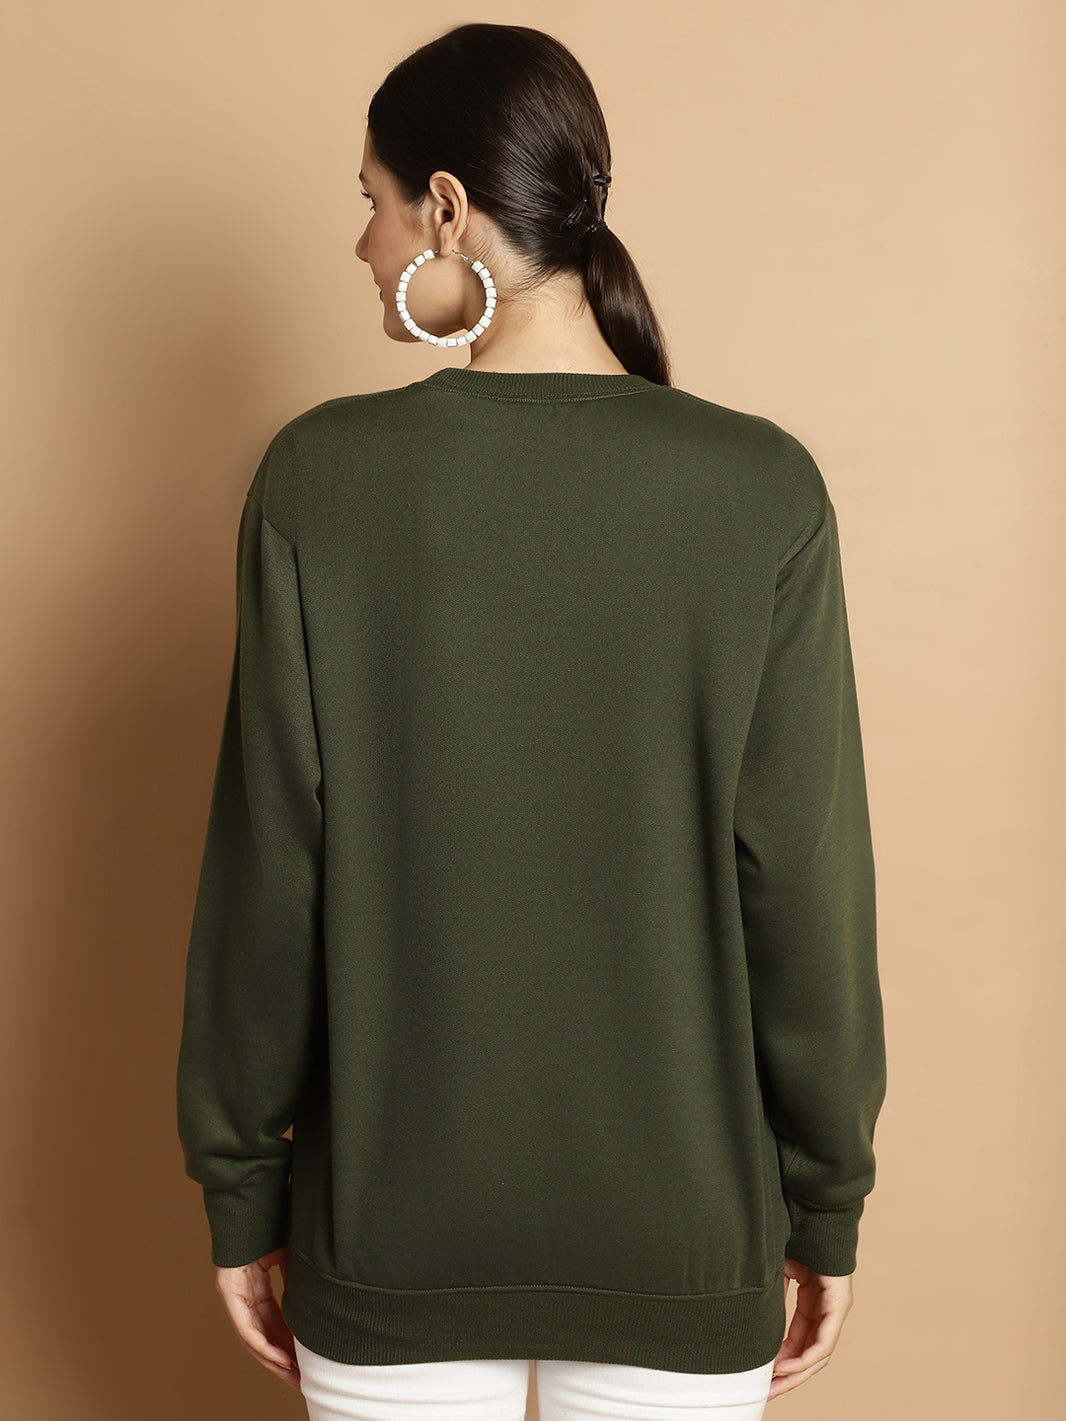 Vimal Jonney Olive Printed Round Neck Cotton Fleece Sweatshirt for Women